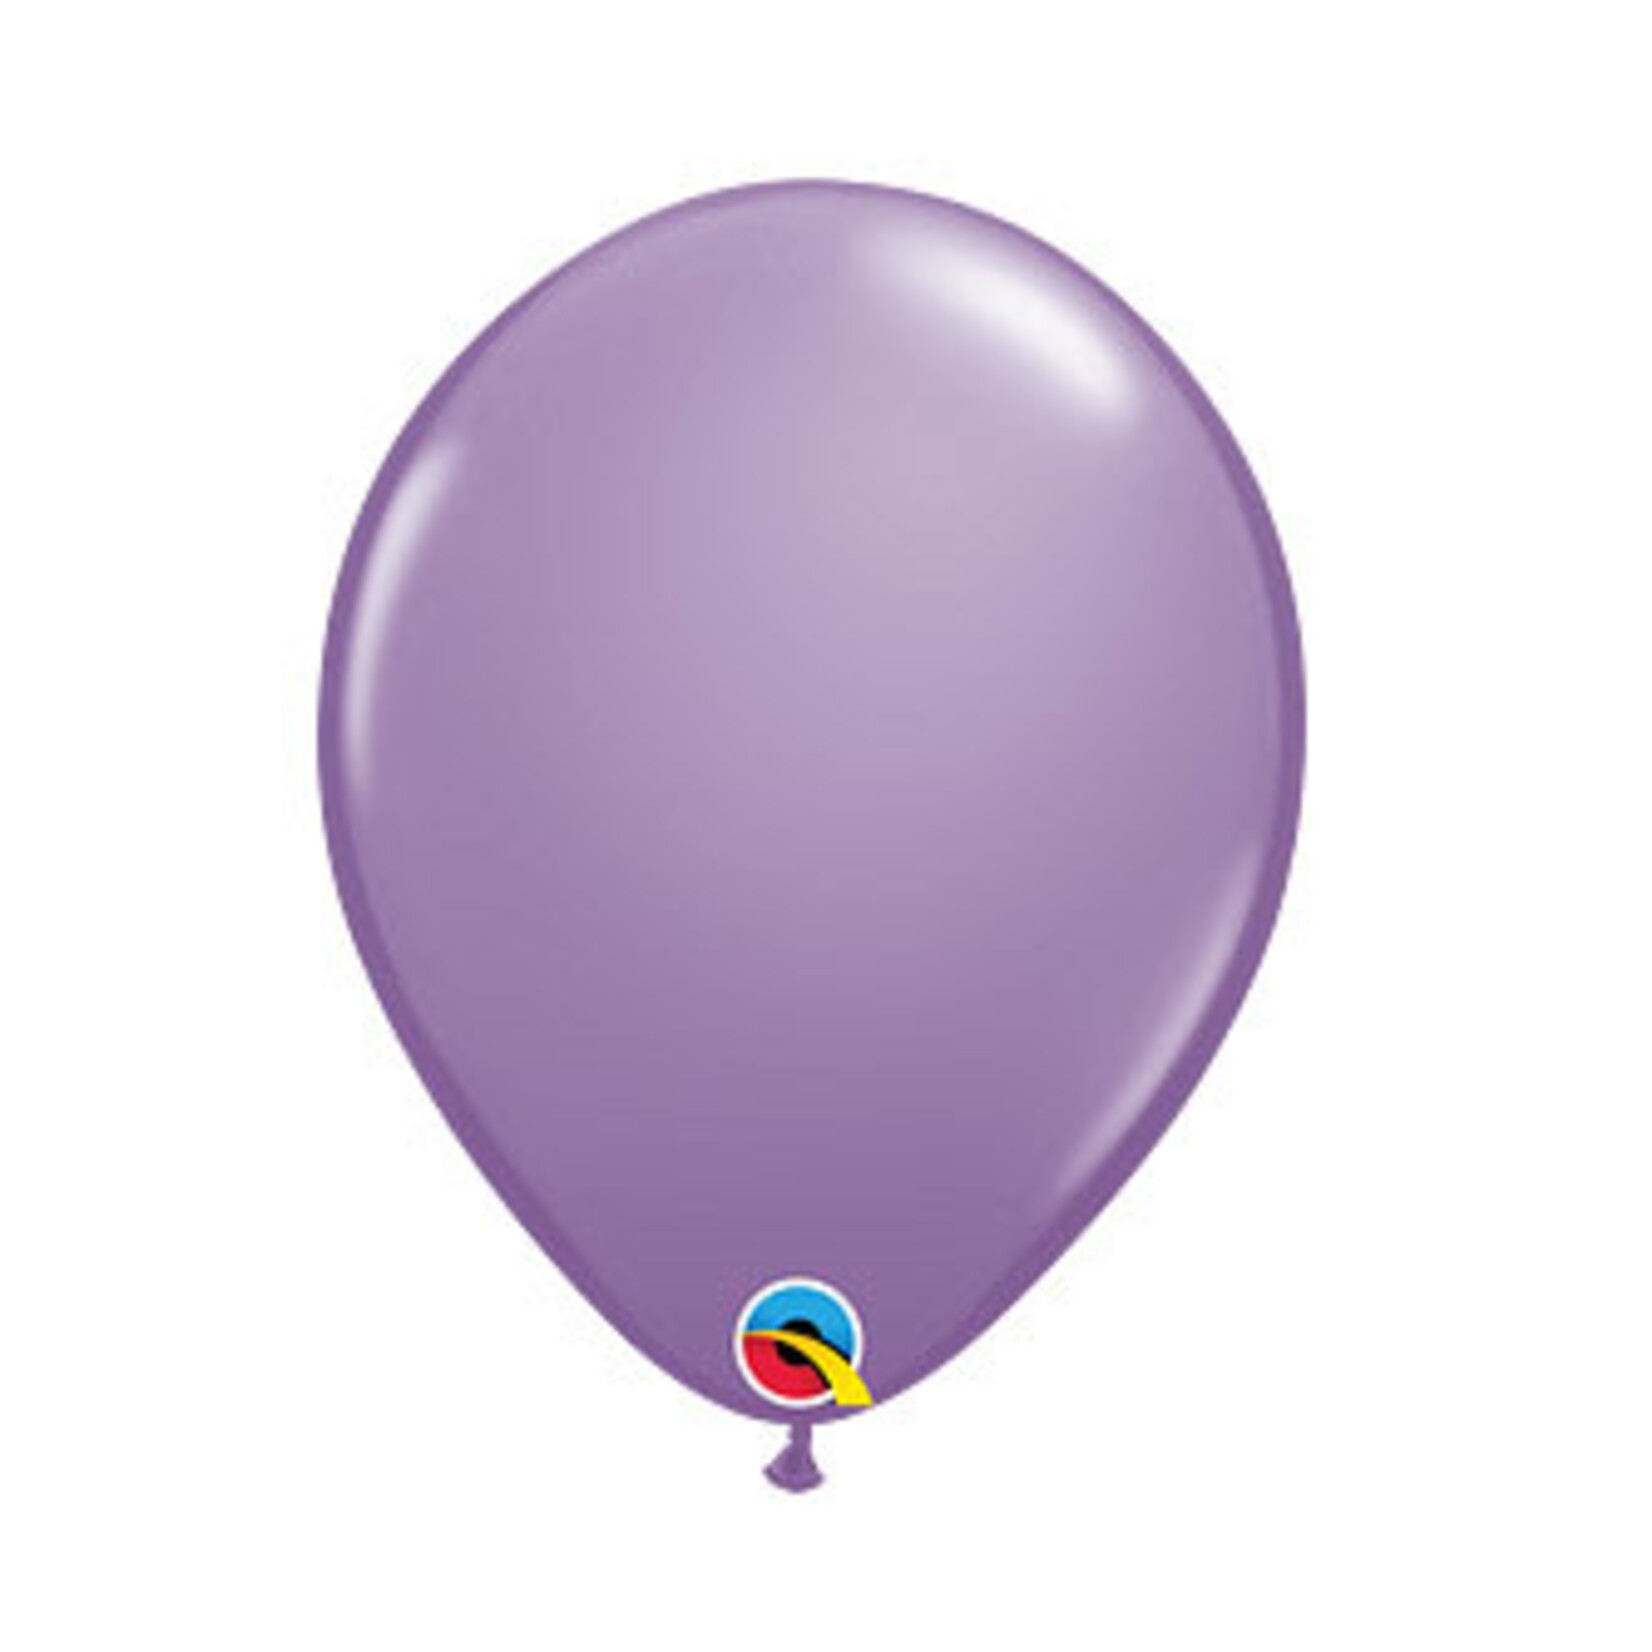 qualatex 11" Spring Lilac Qualatex Latex Balloons - 100ct.